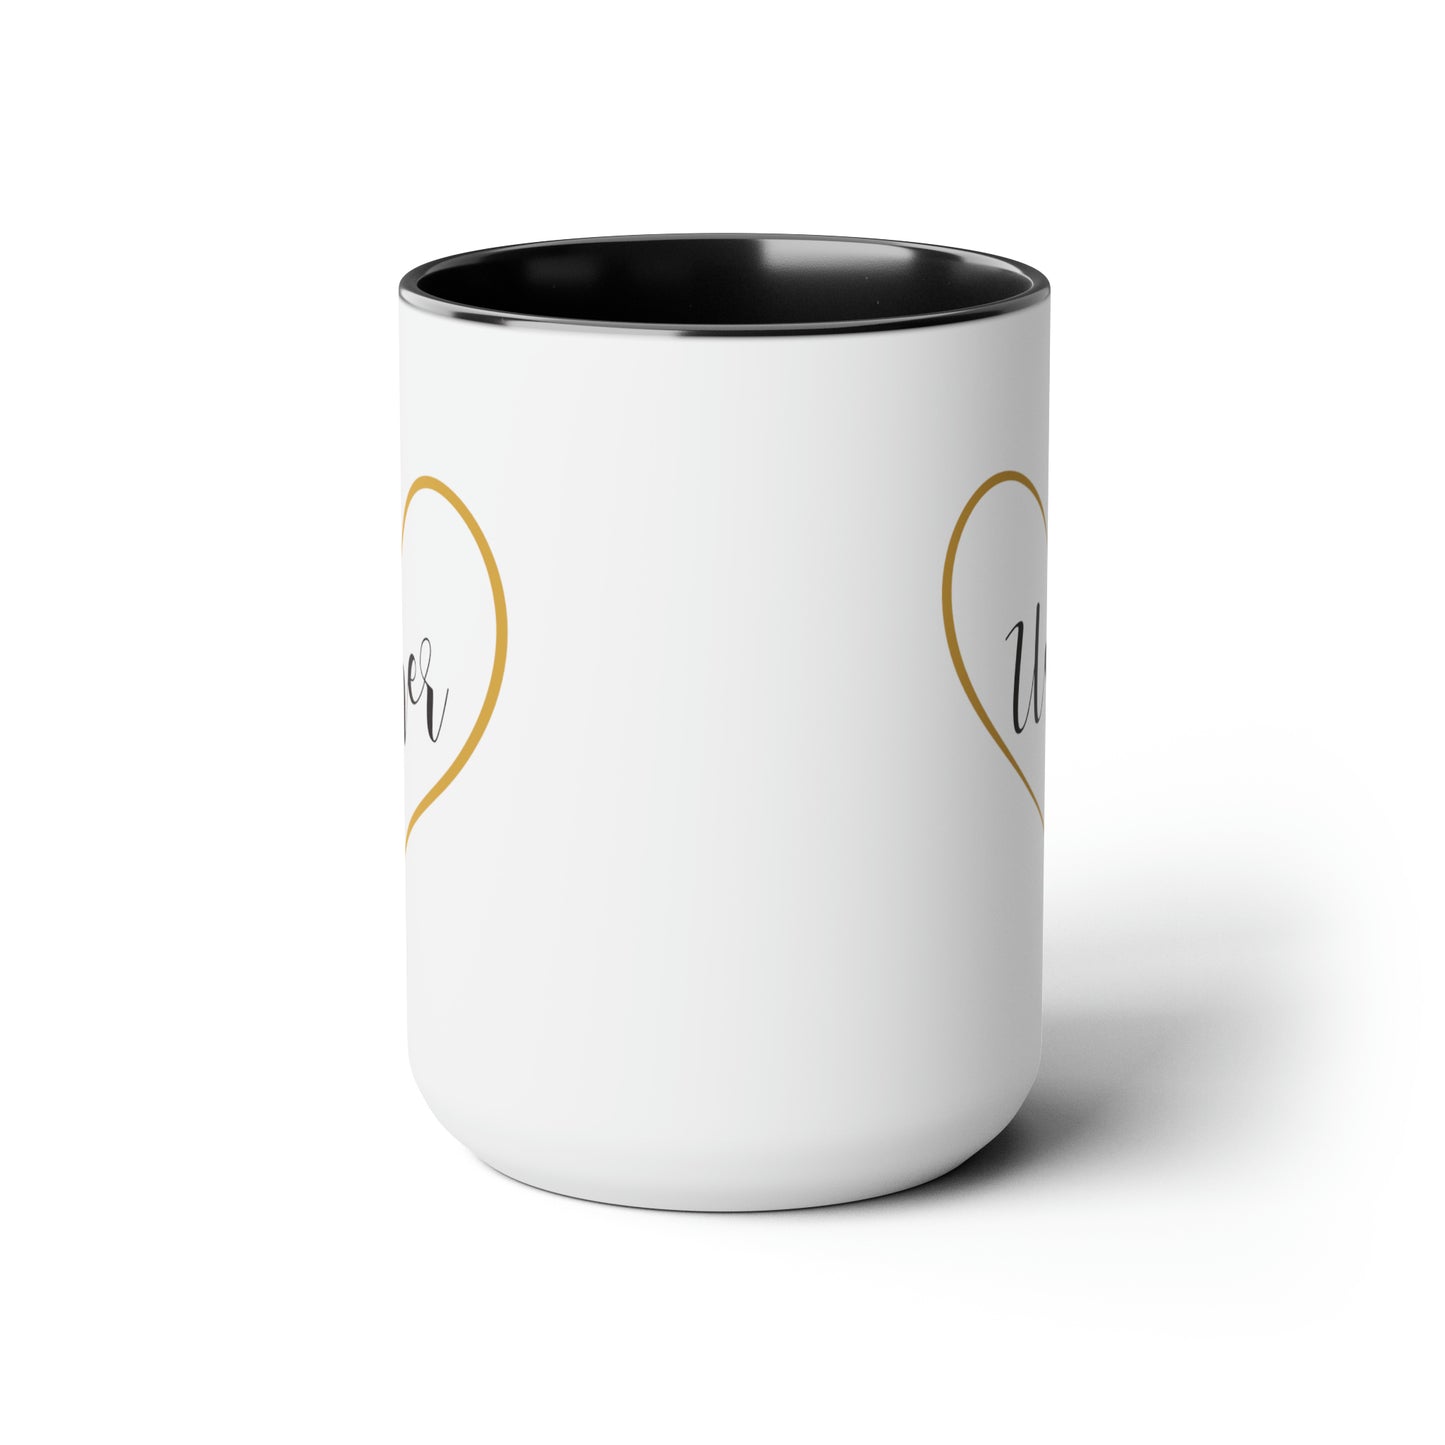 Usher Coffee Mug - Double Sided Black Accent Ceramic 15oz by TheGlassyLass.com